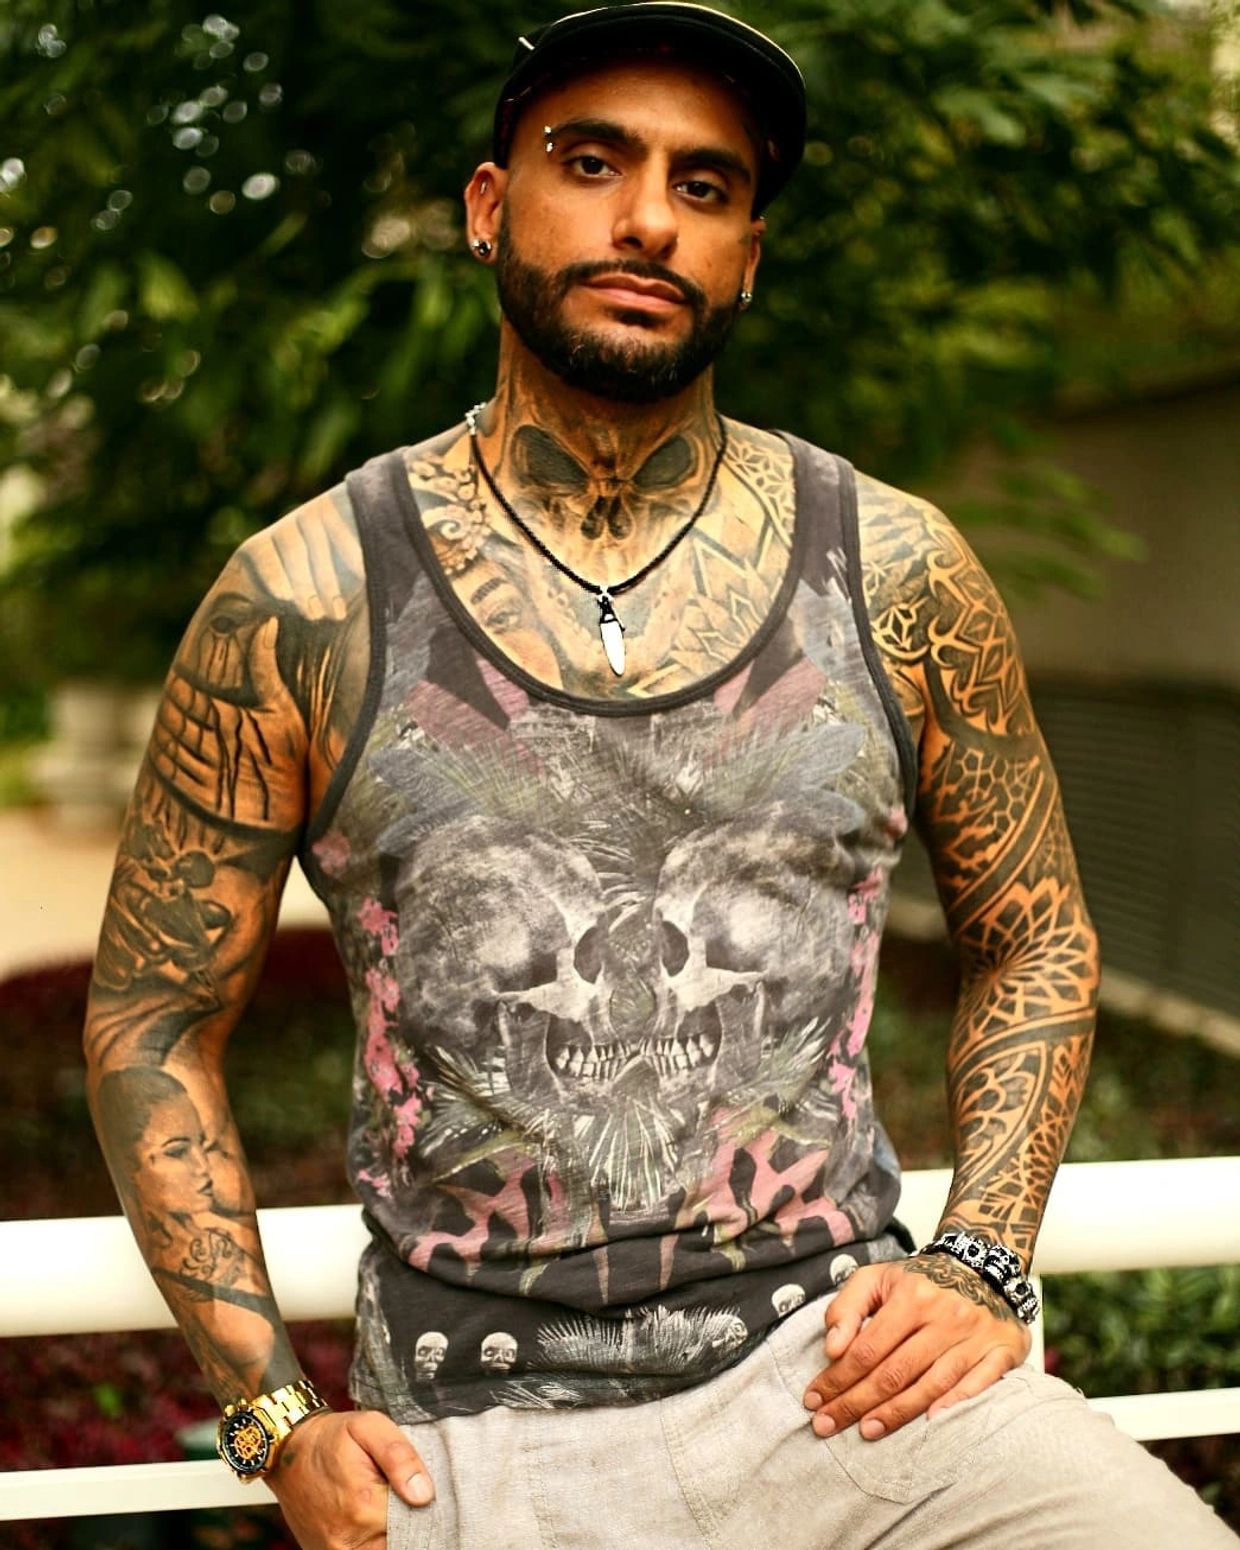 Andre Taddeo Tattoo artist from Brazil